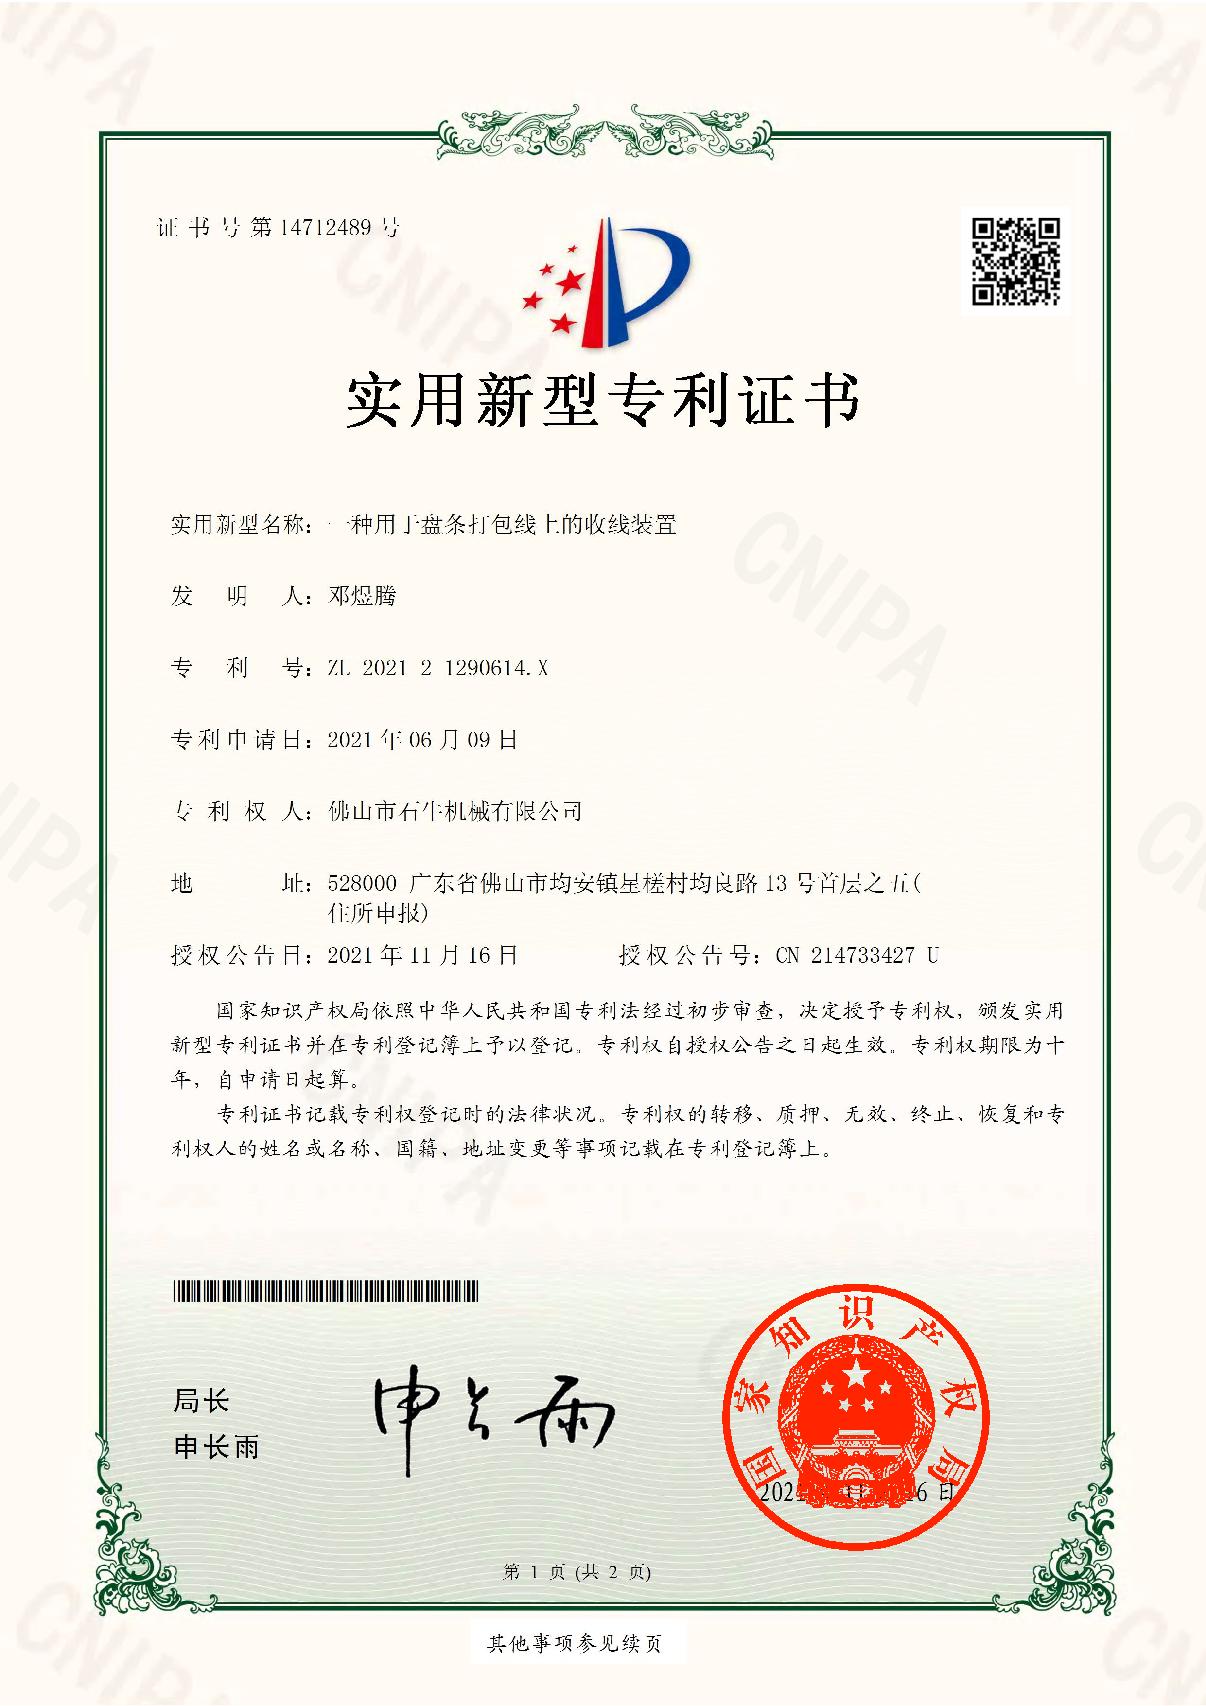 202121290614X-实用新型专利证书(签章)_1.JPG